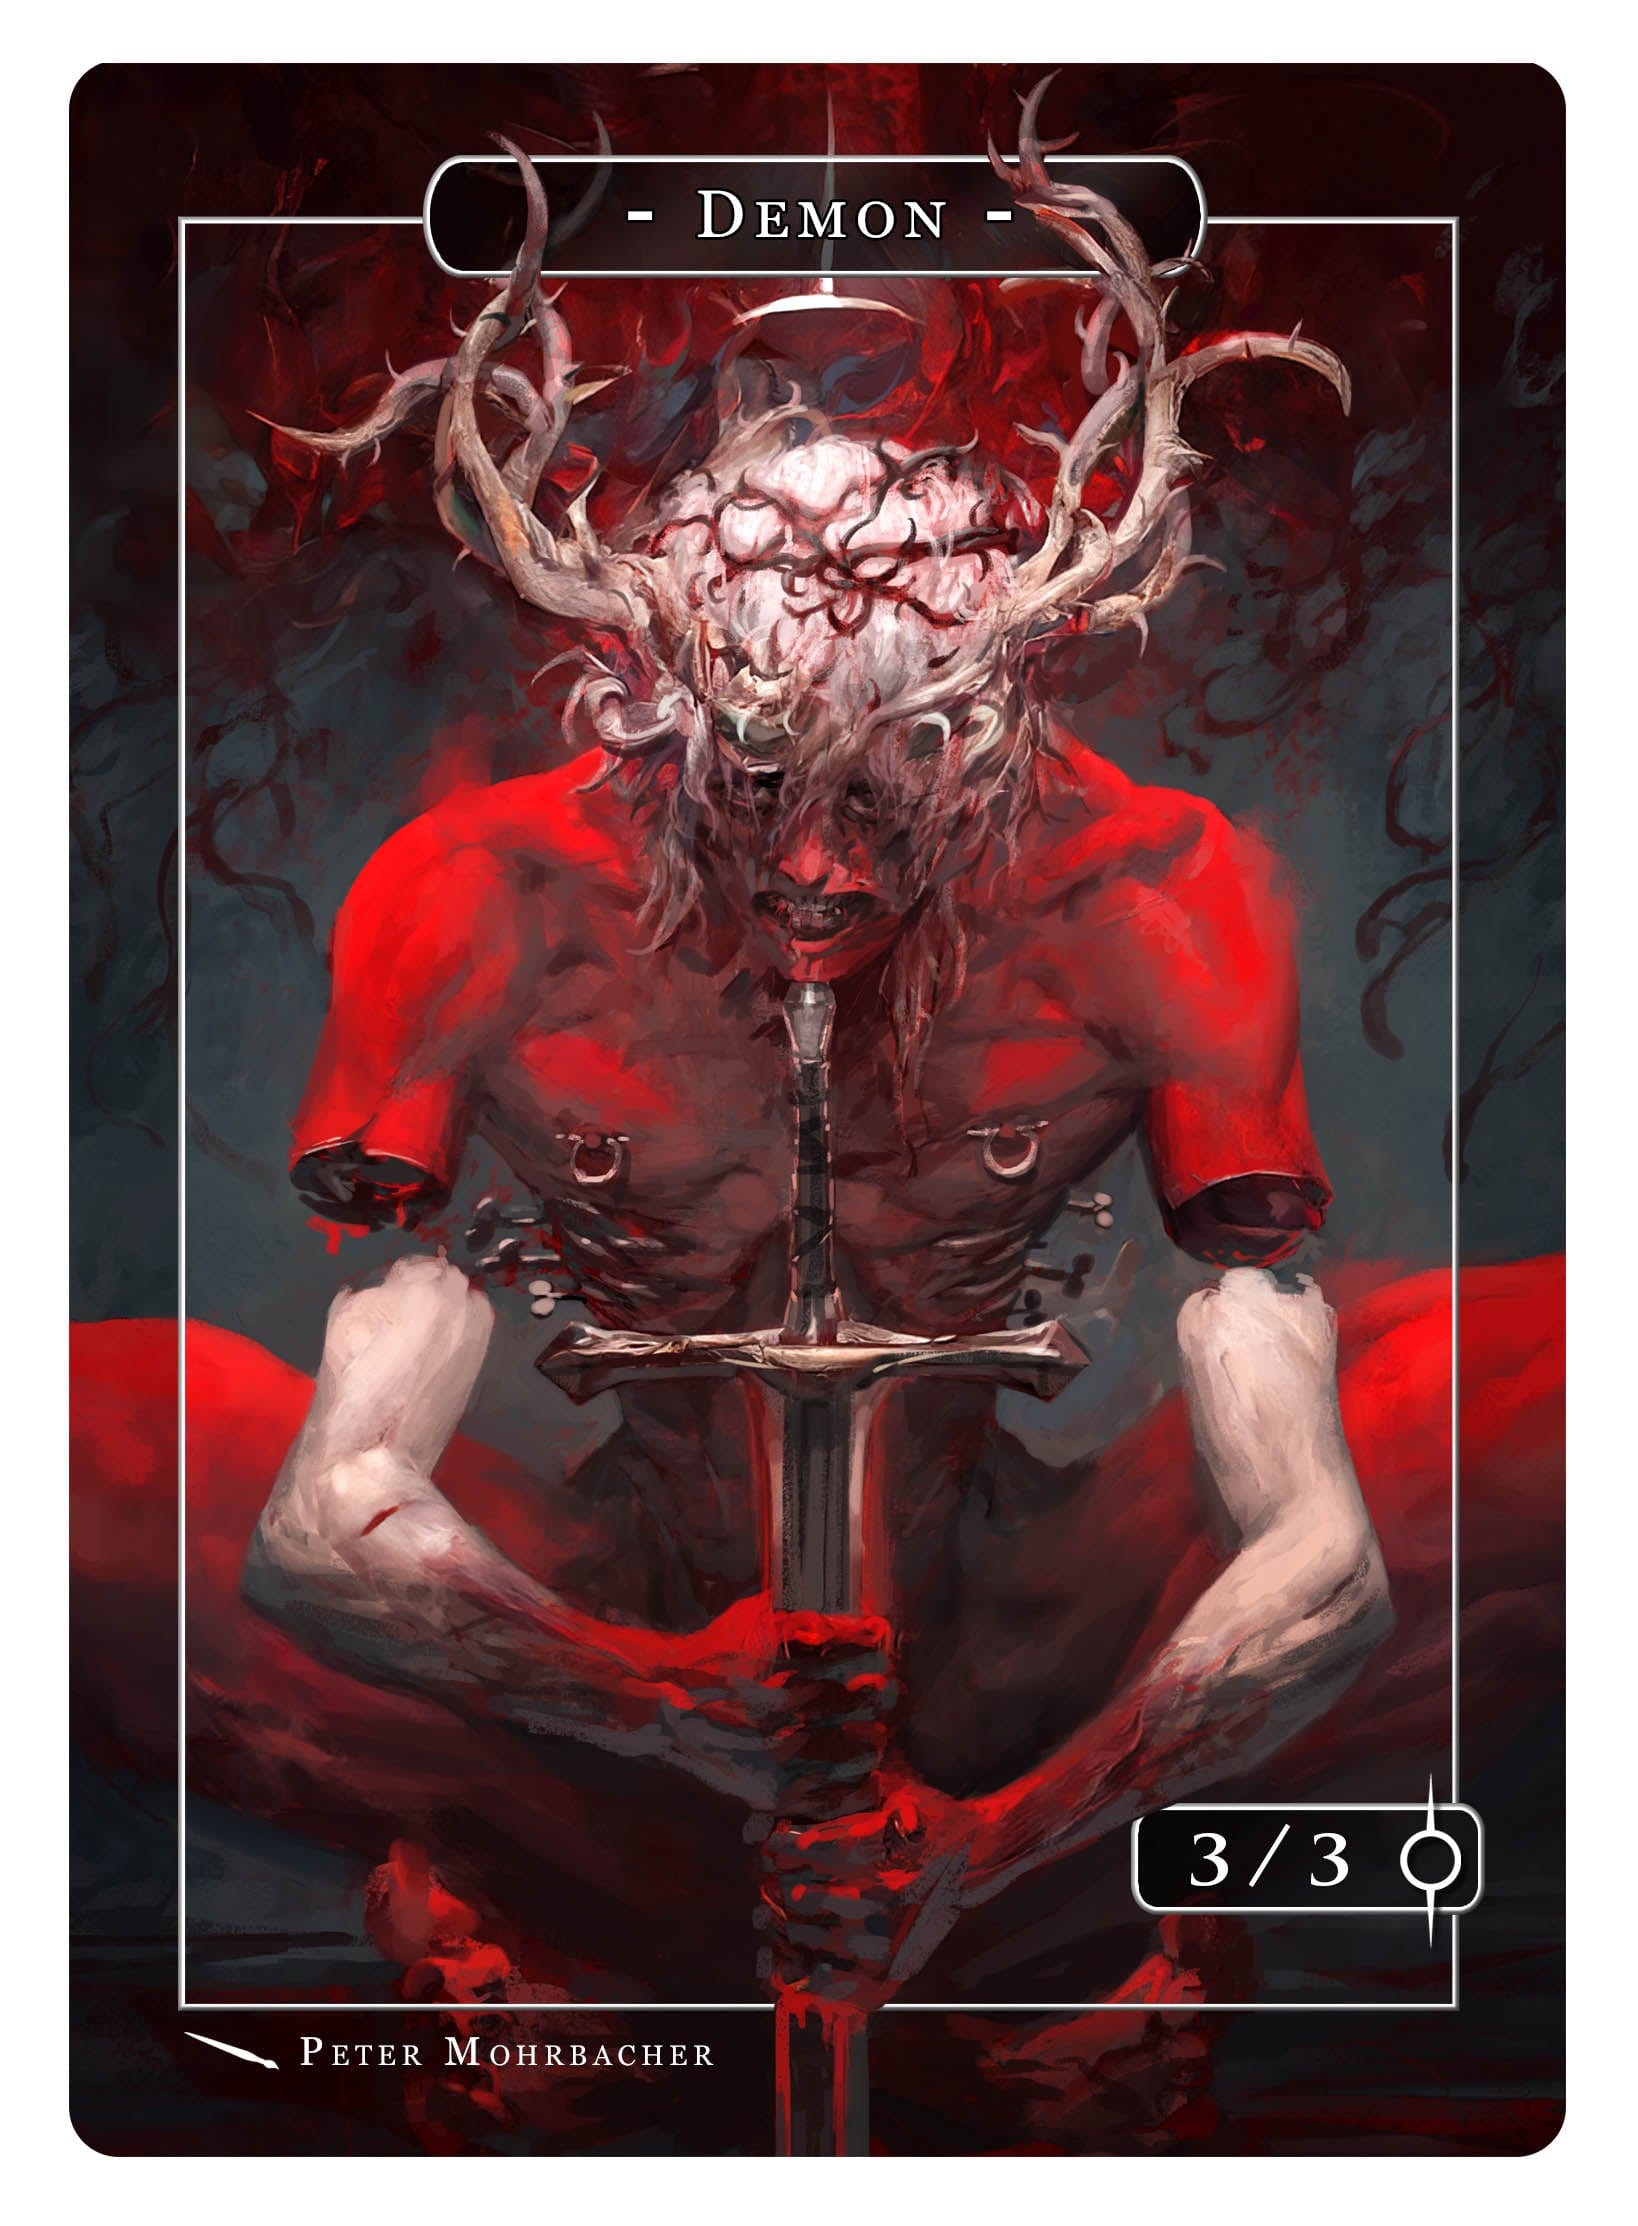 Demon Token (3/3) by Peter Mohrbacher